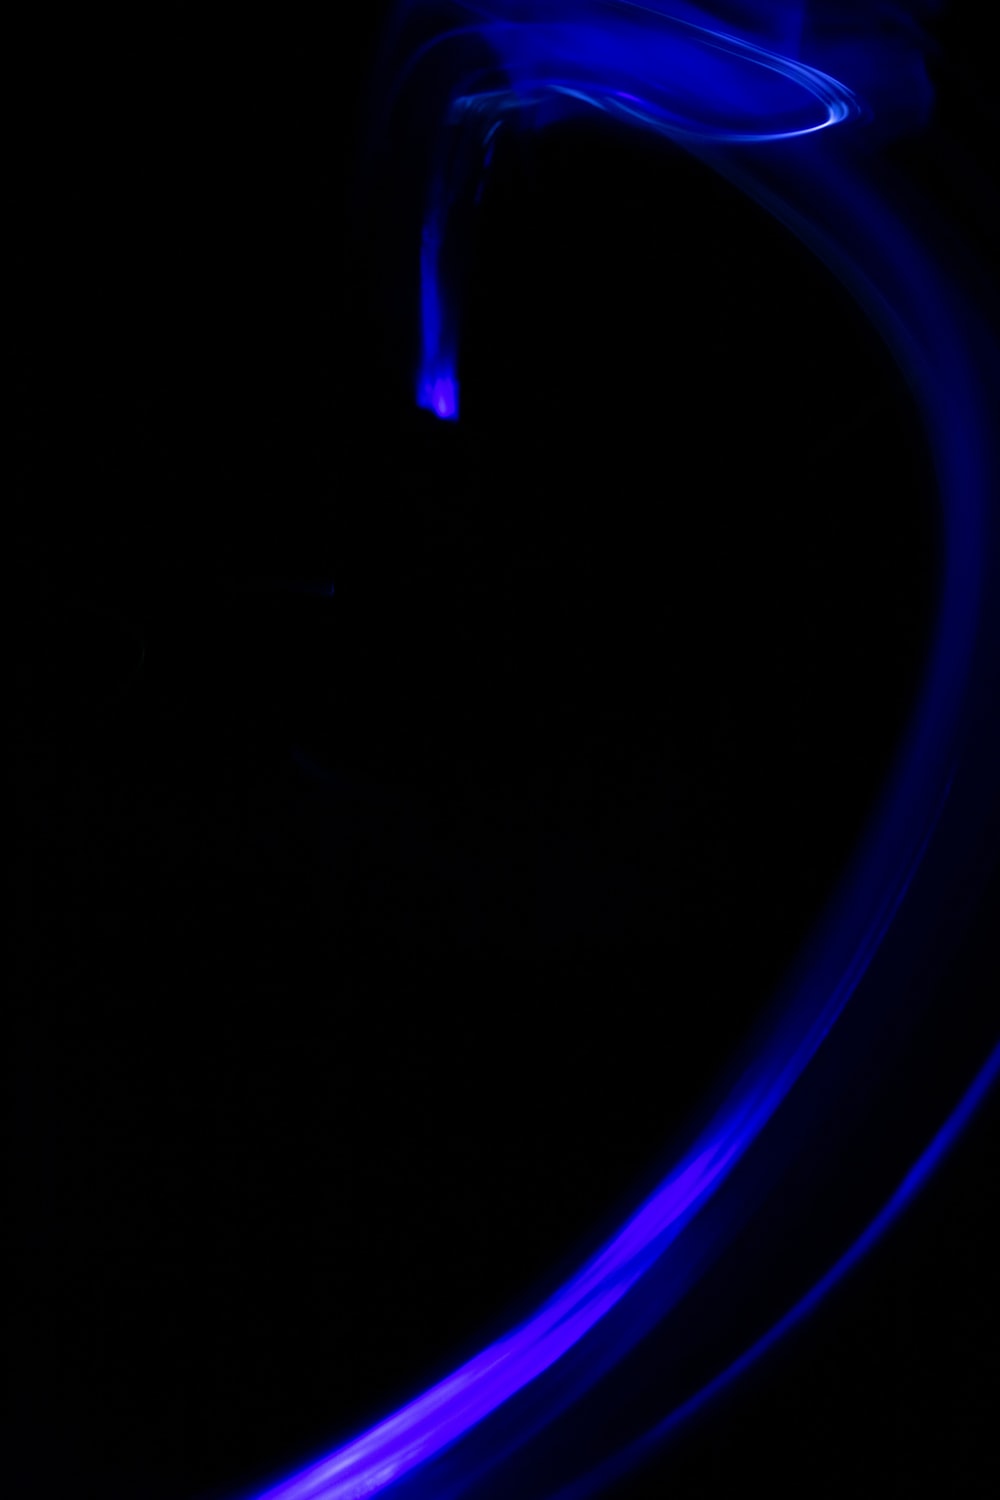 Blue And Black Light Digital Wallpaper Photo Image